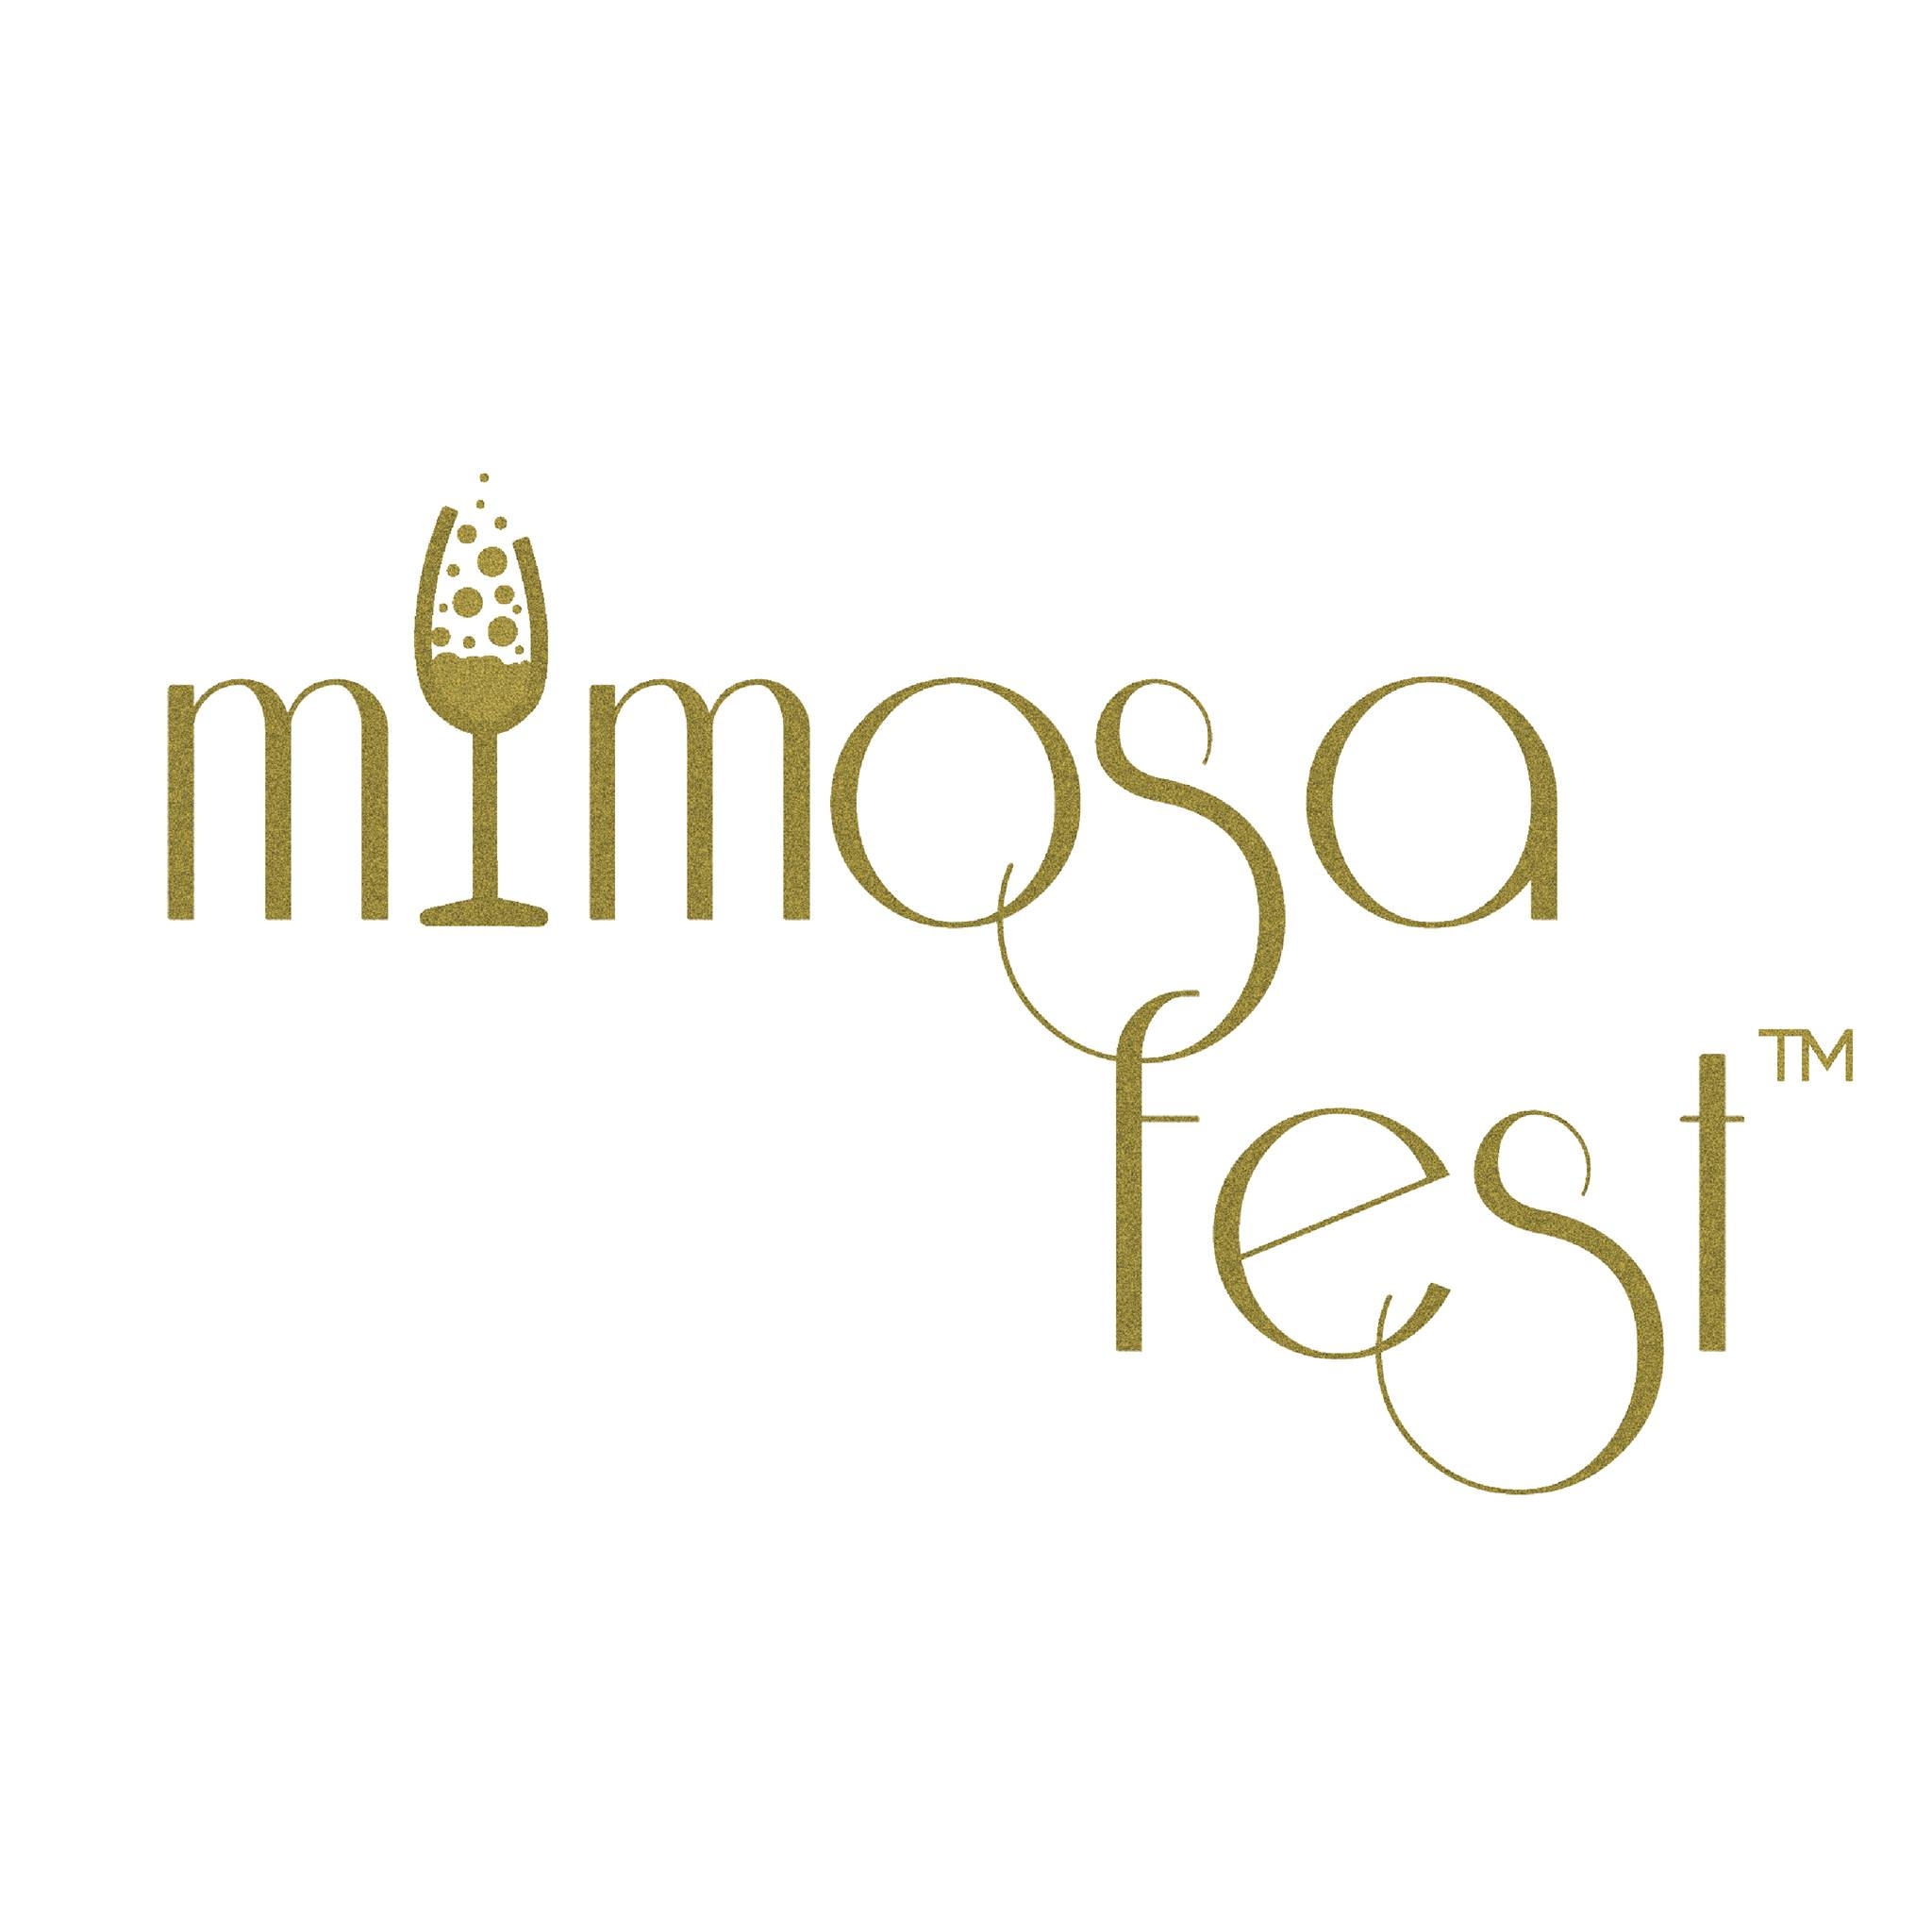 Mimosa Fest